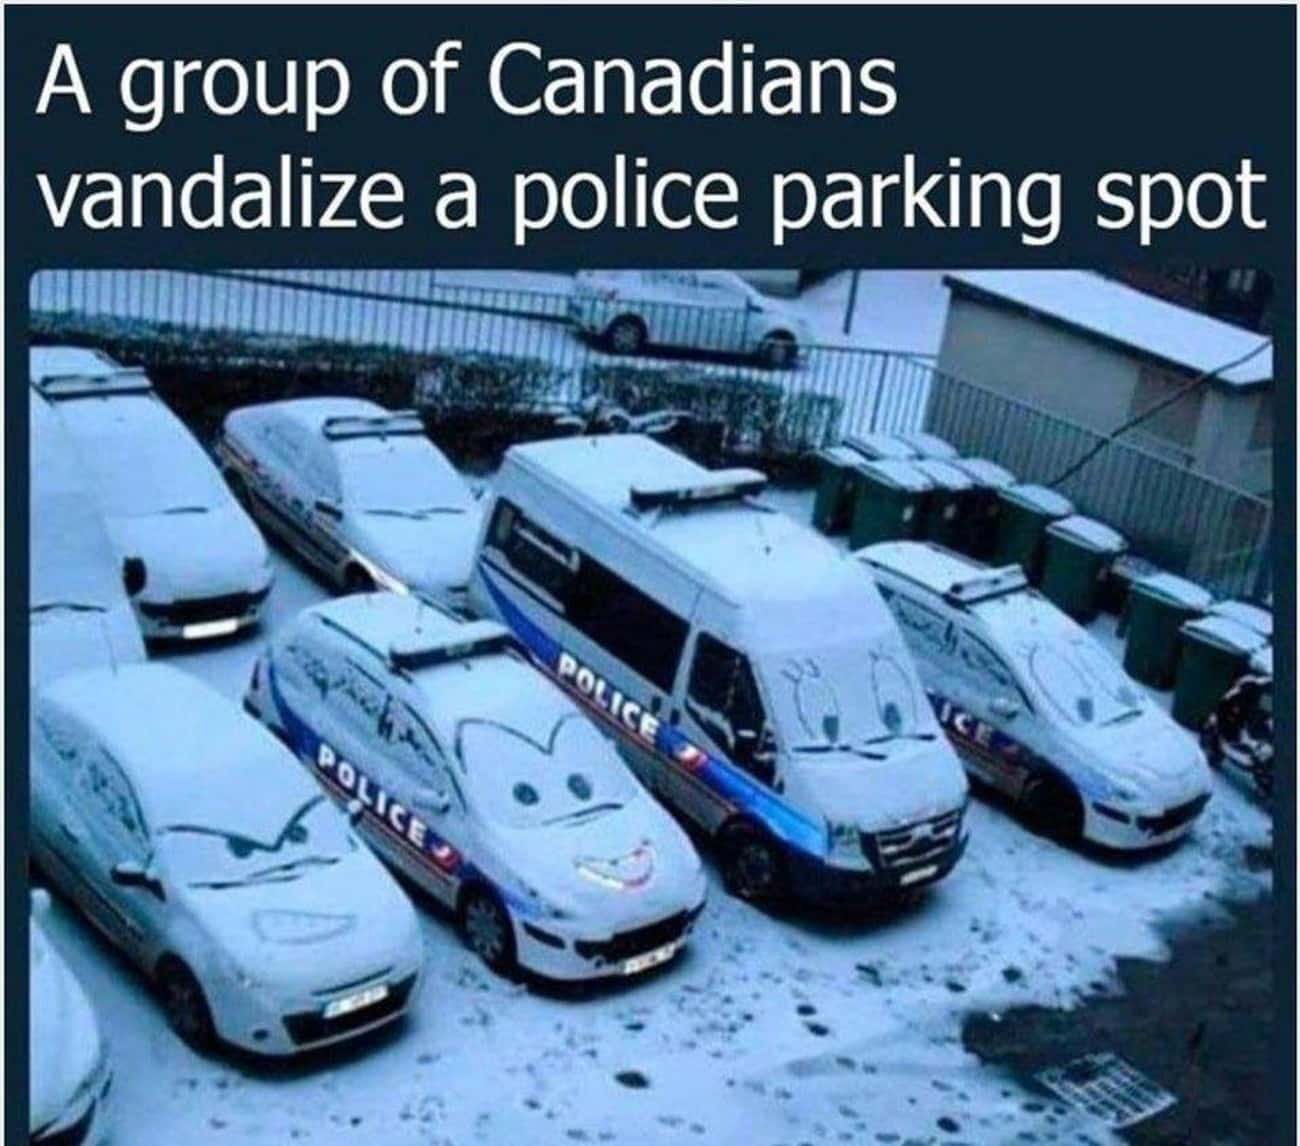 Canadian Vandalism, Eh